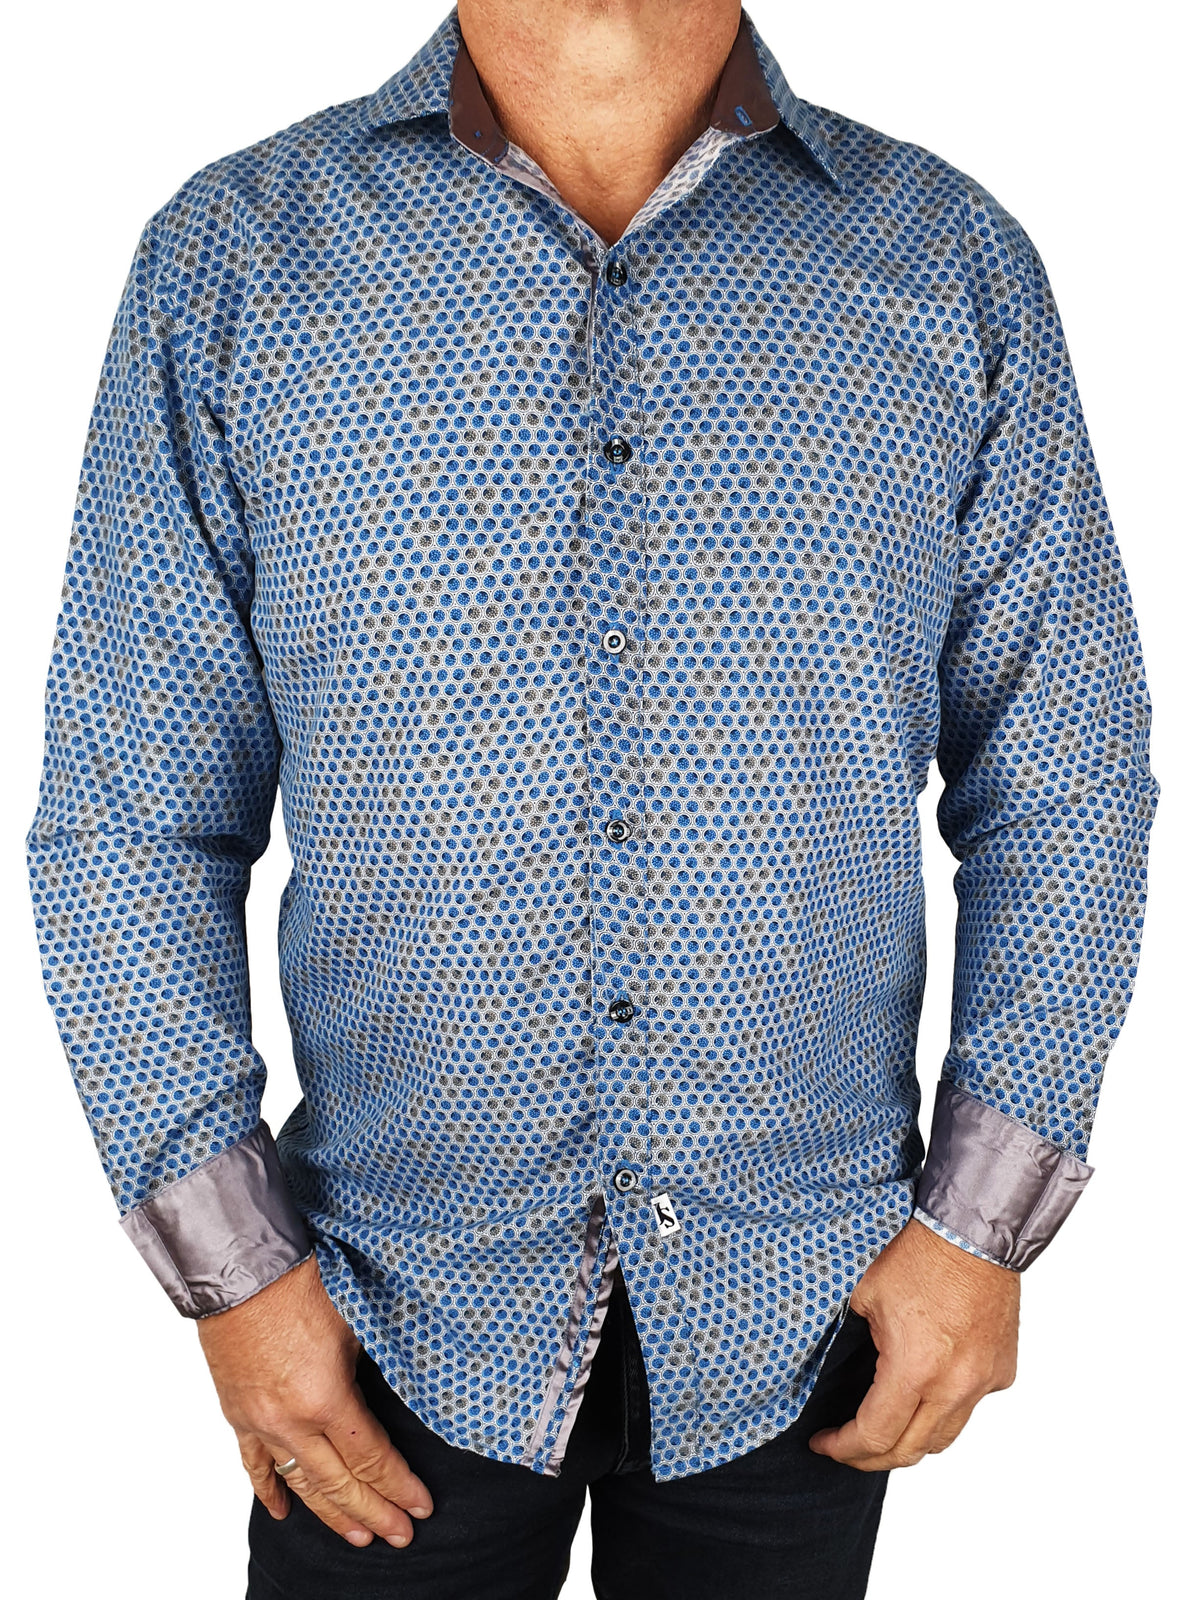 Nuclear Printed Cotton/Nylon L/S Big Mens Shirt - Navy/Grey